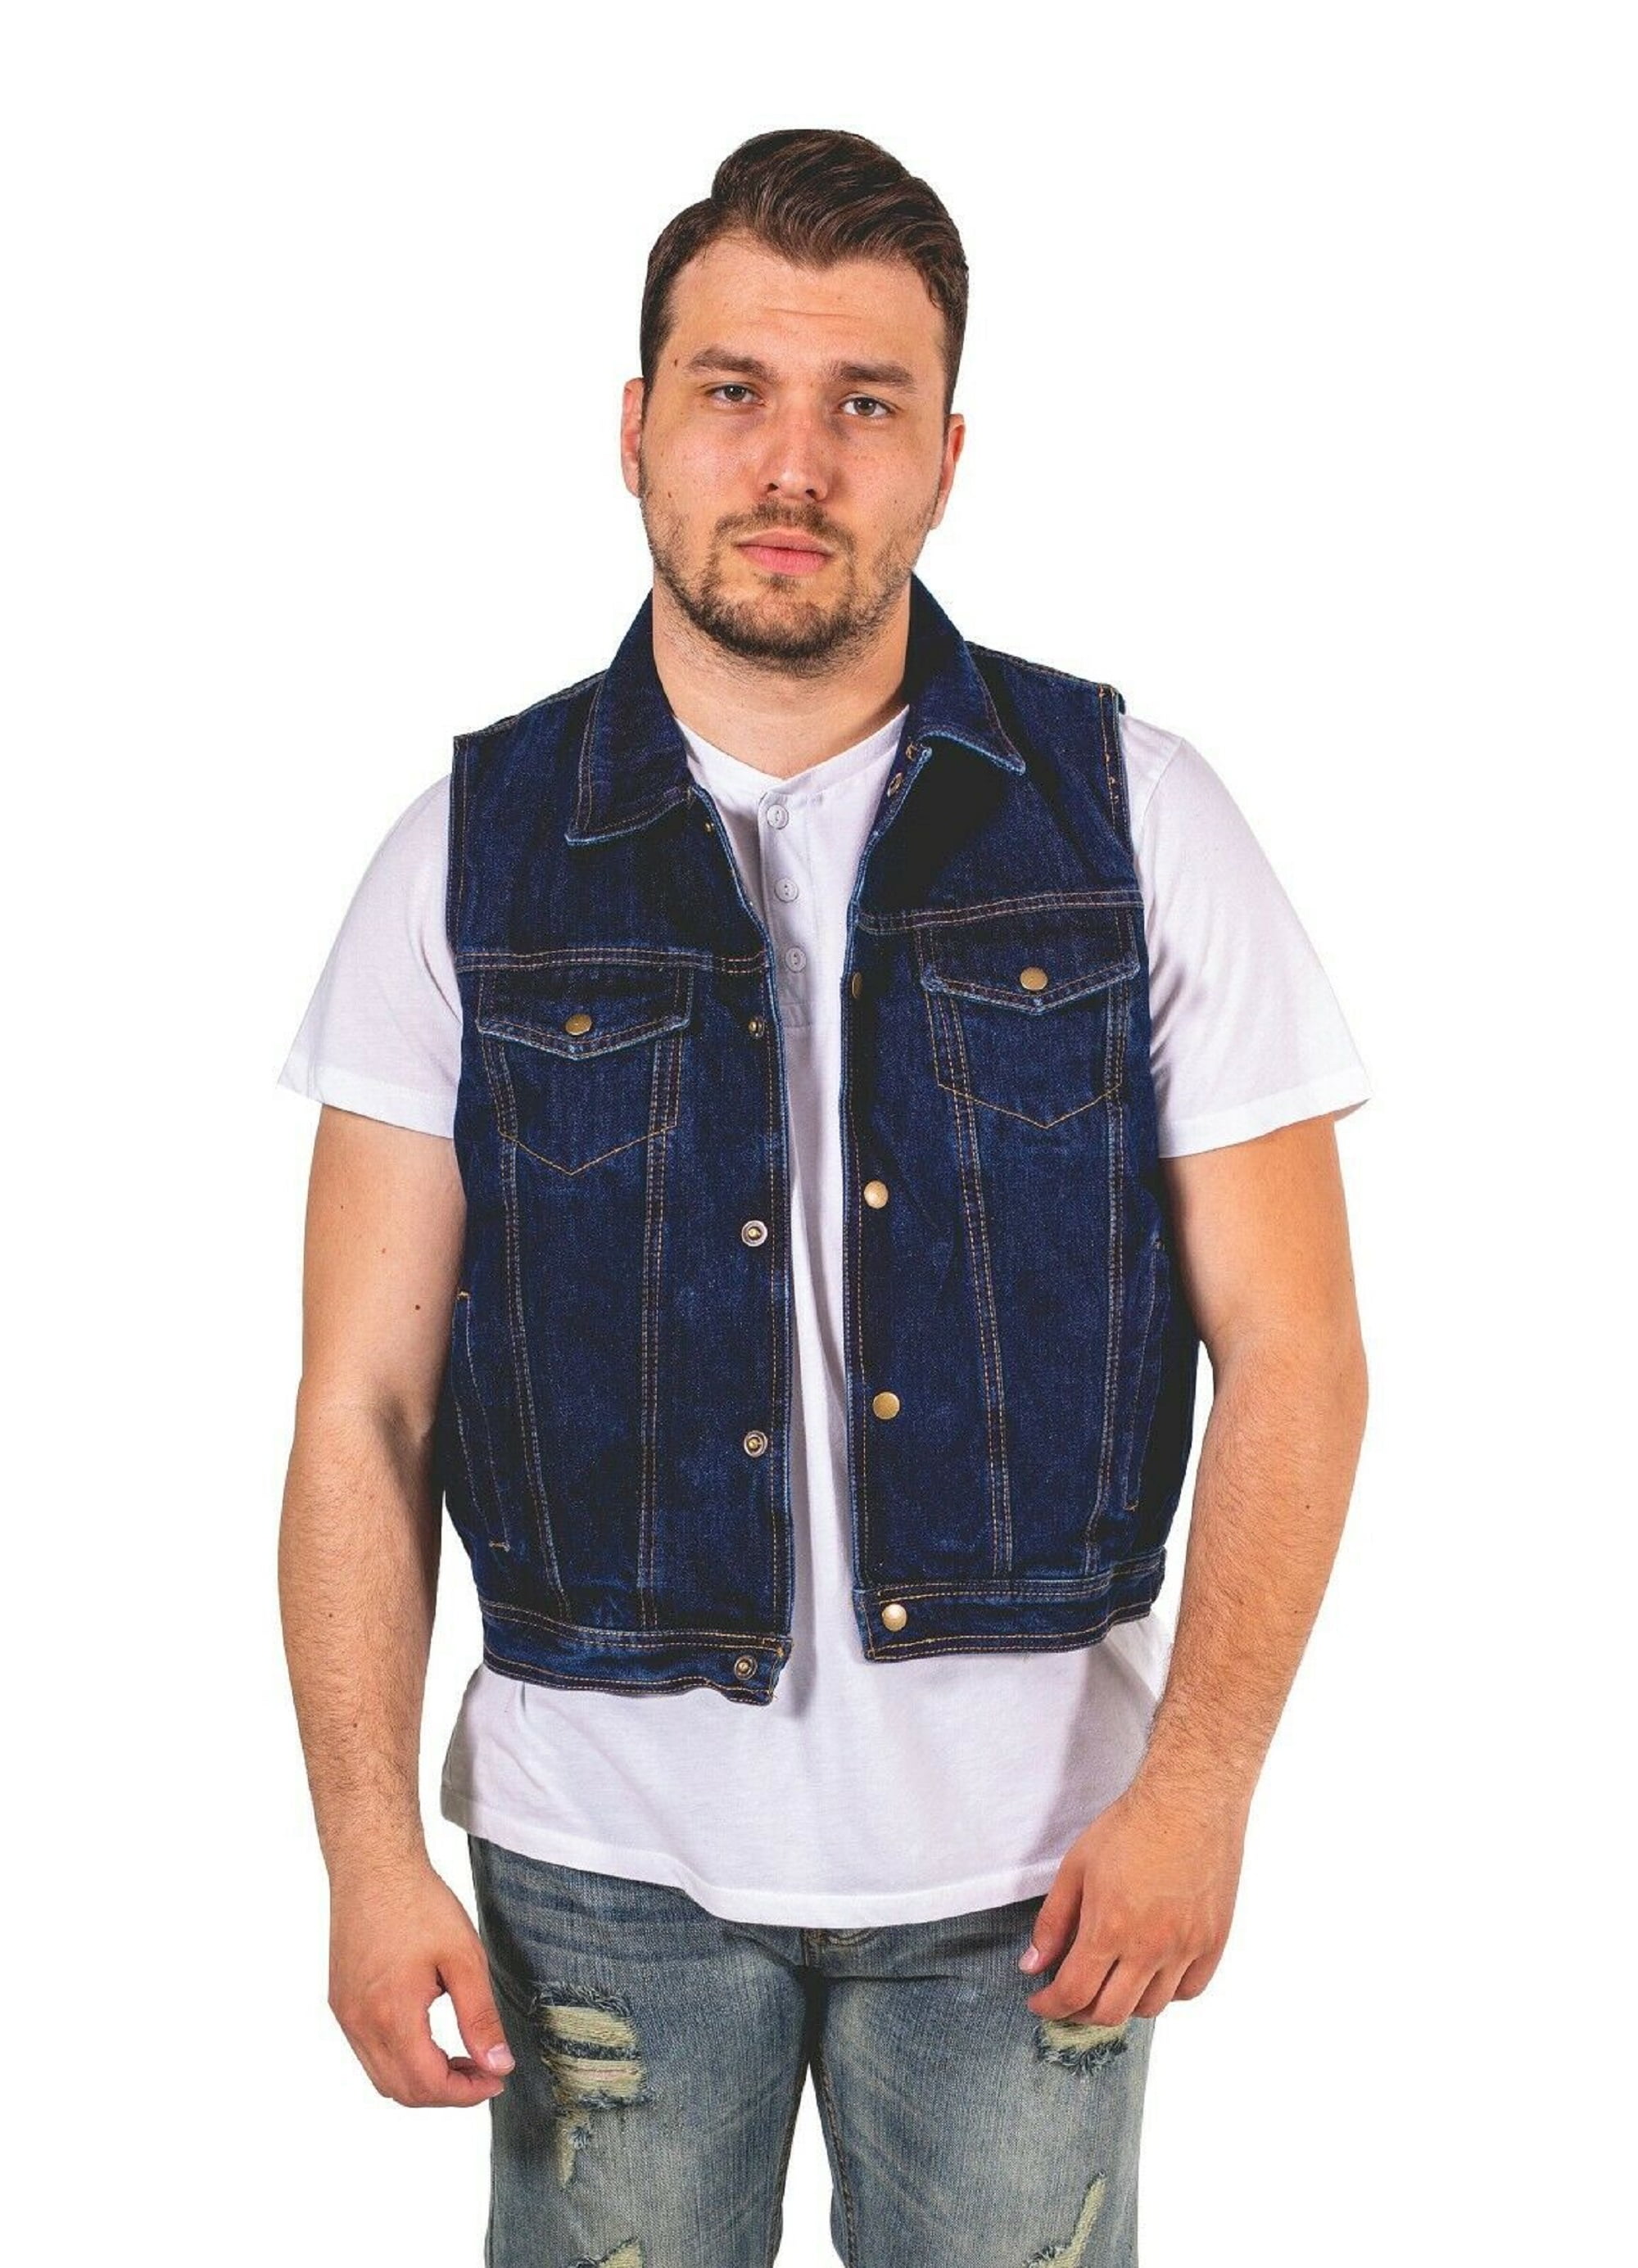 Men's SOA Style Collarles Denim Club Vest Black w/ Gun Pocket,Snap/ Zipper Front